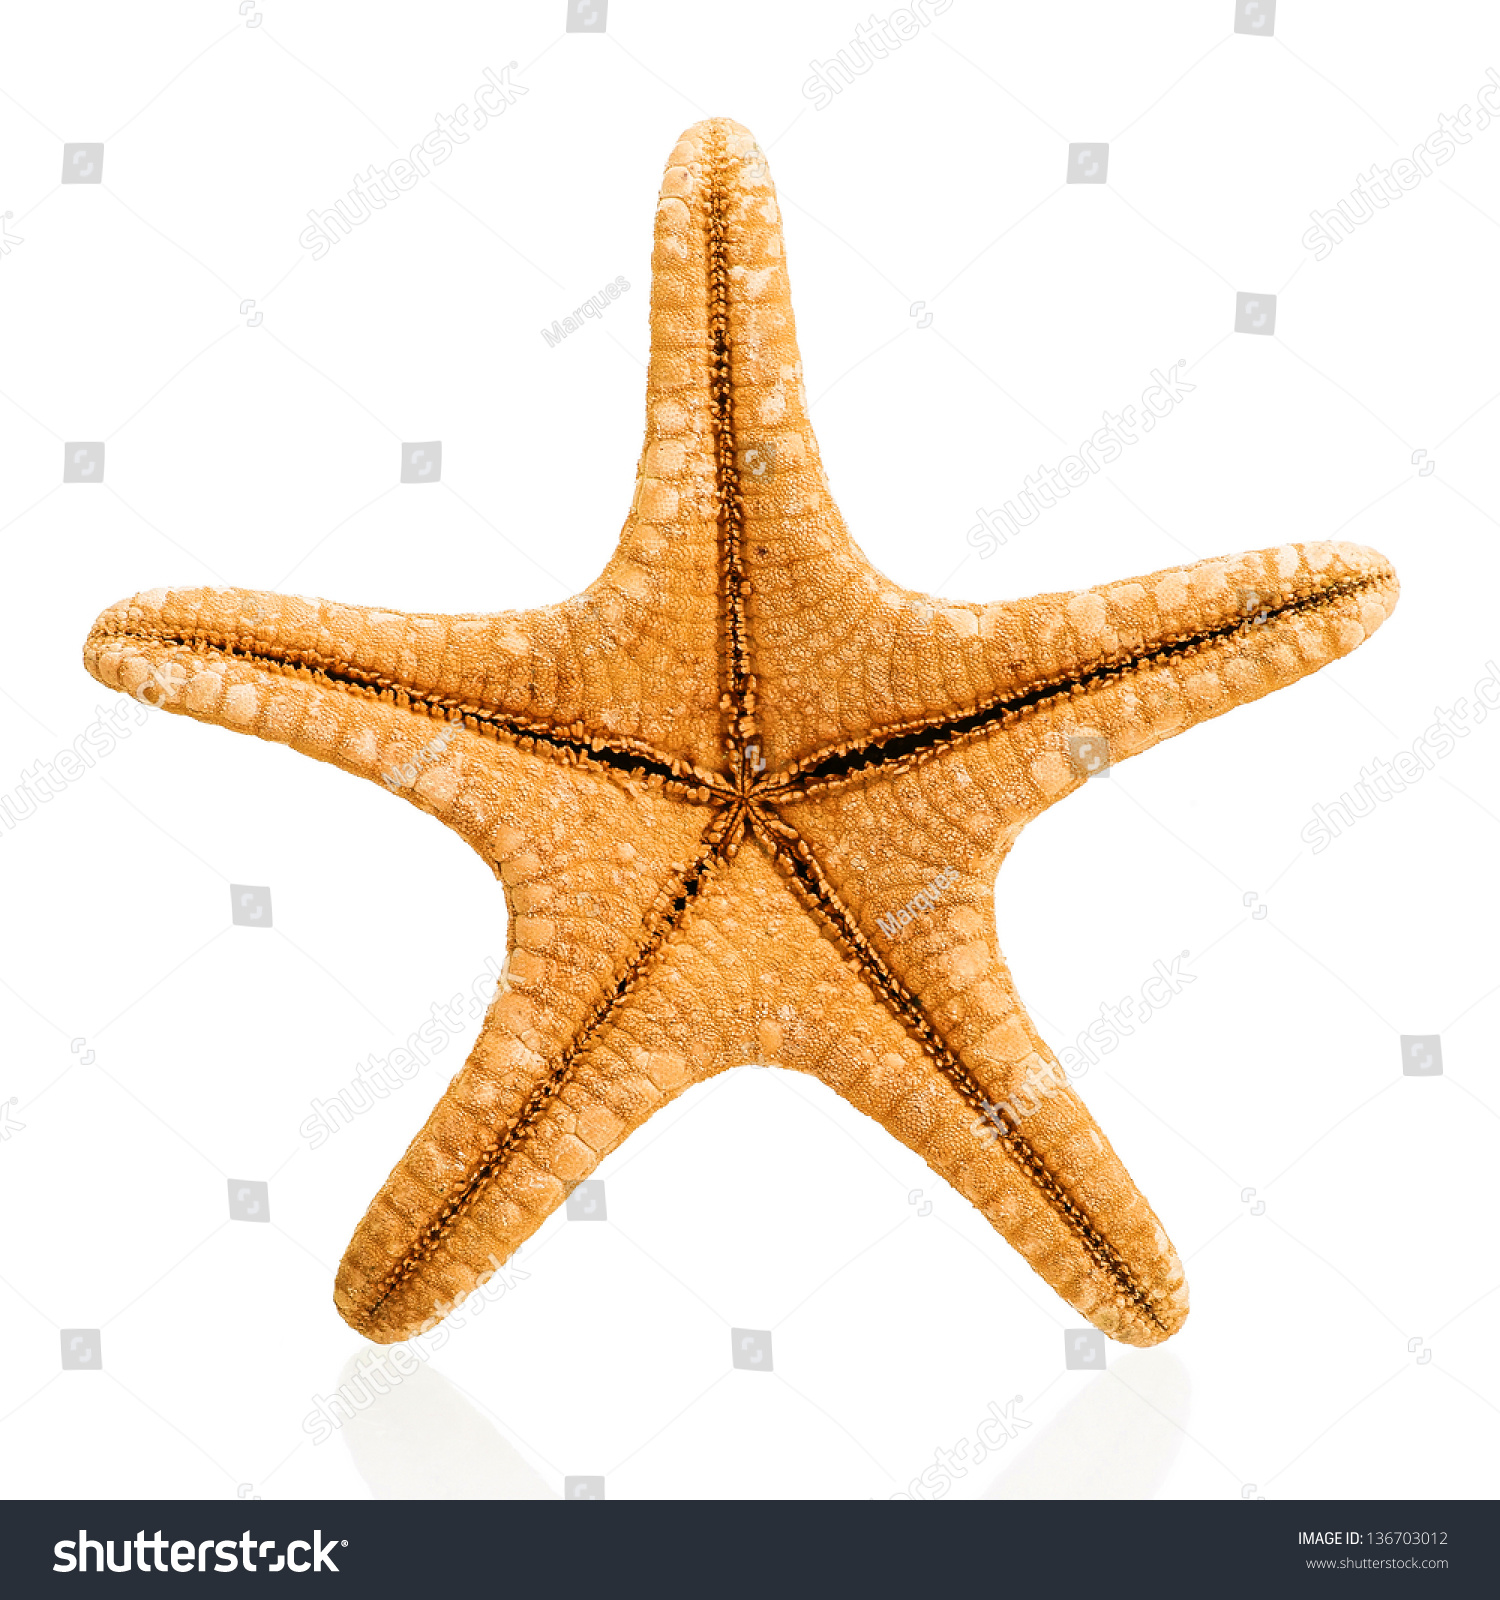 A starfish isolated photo